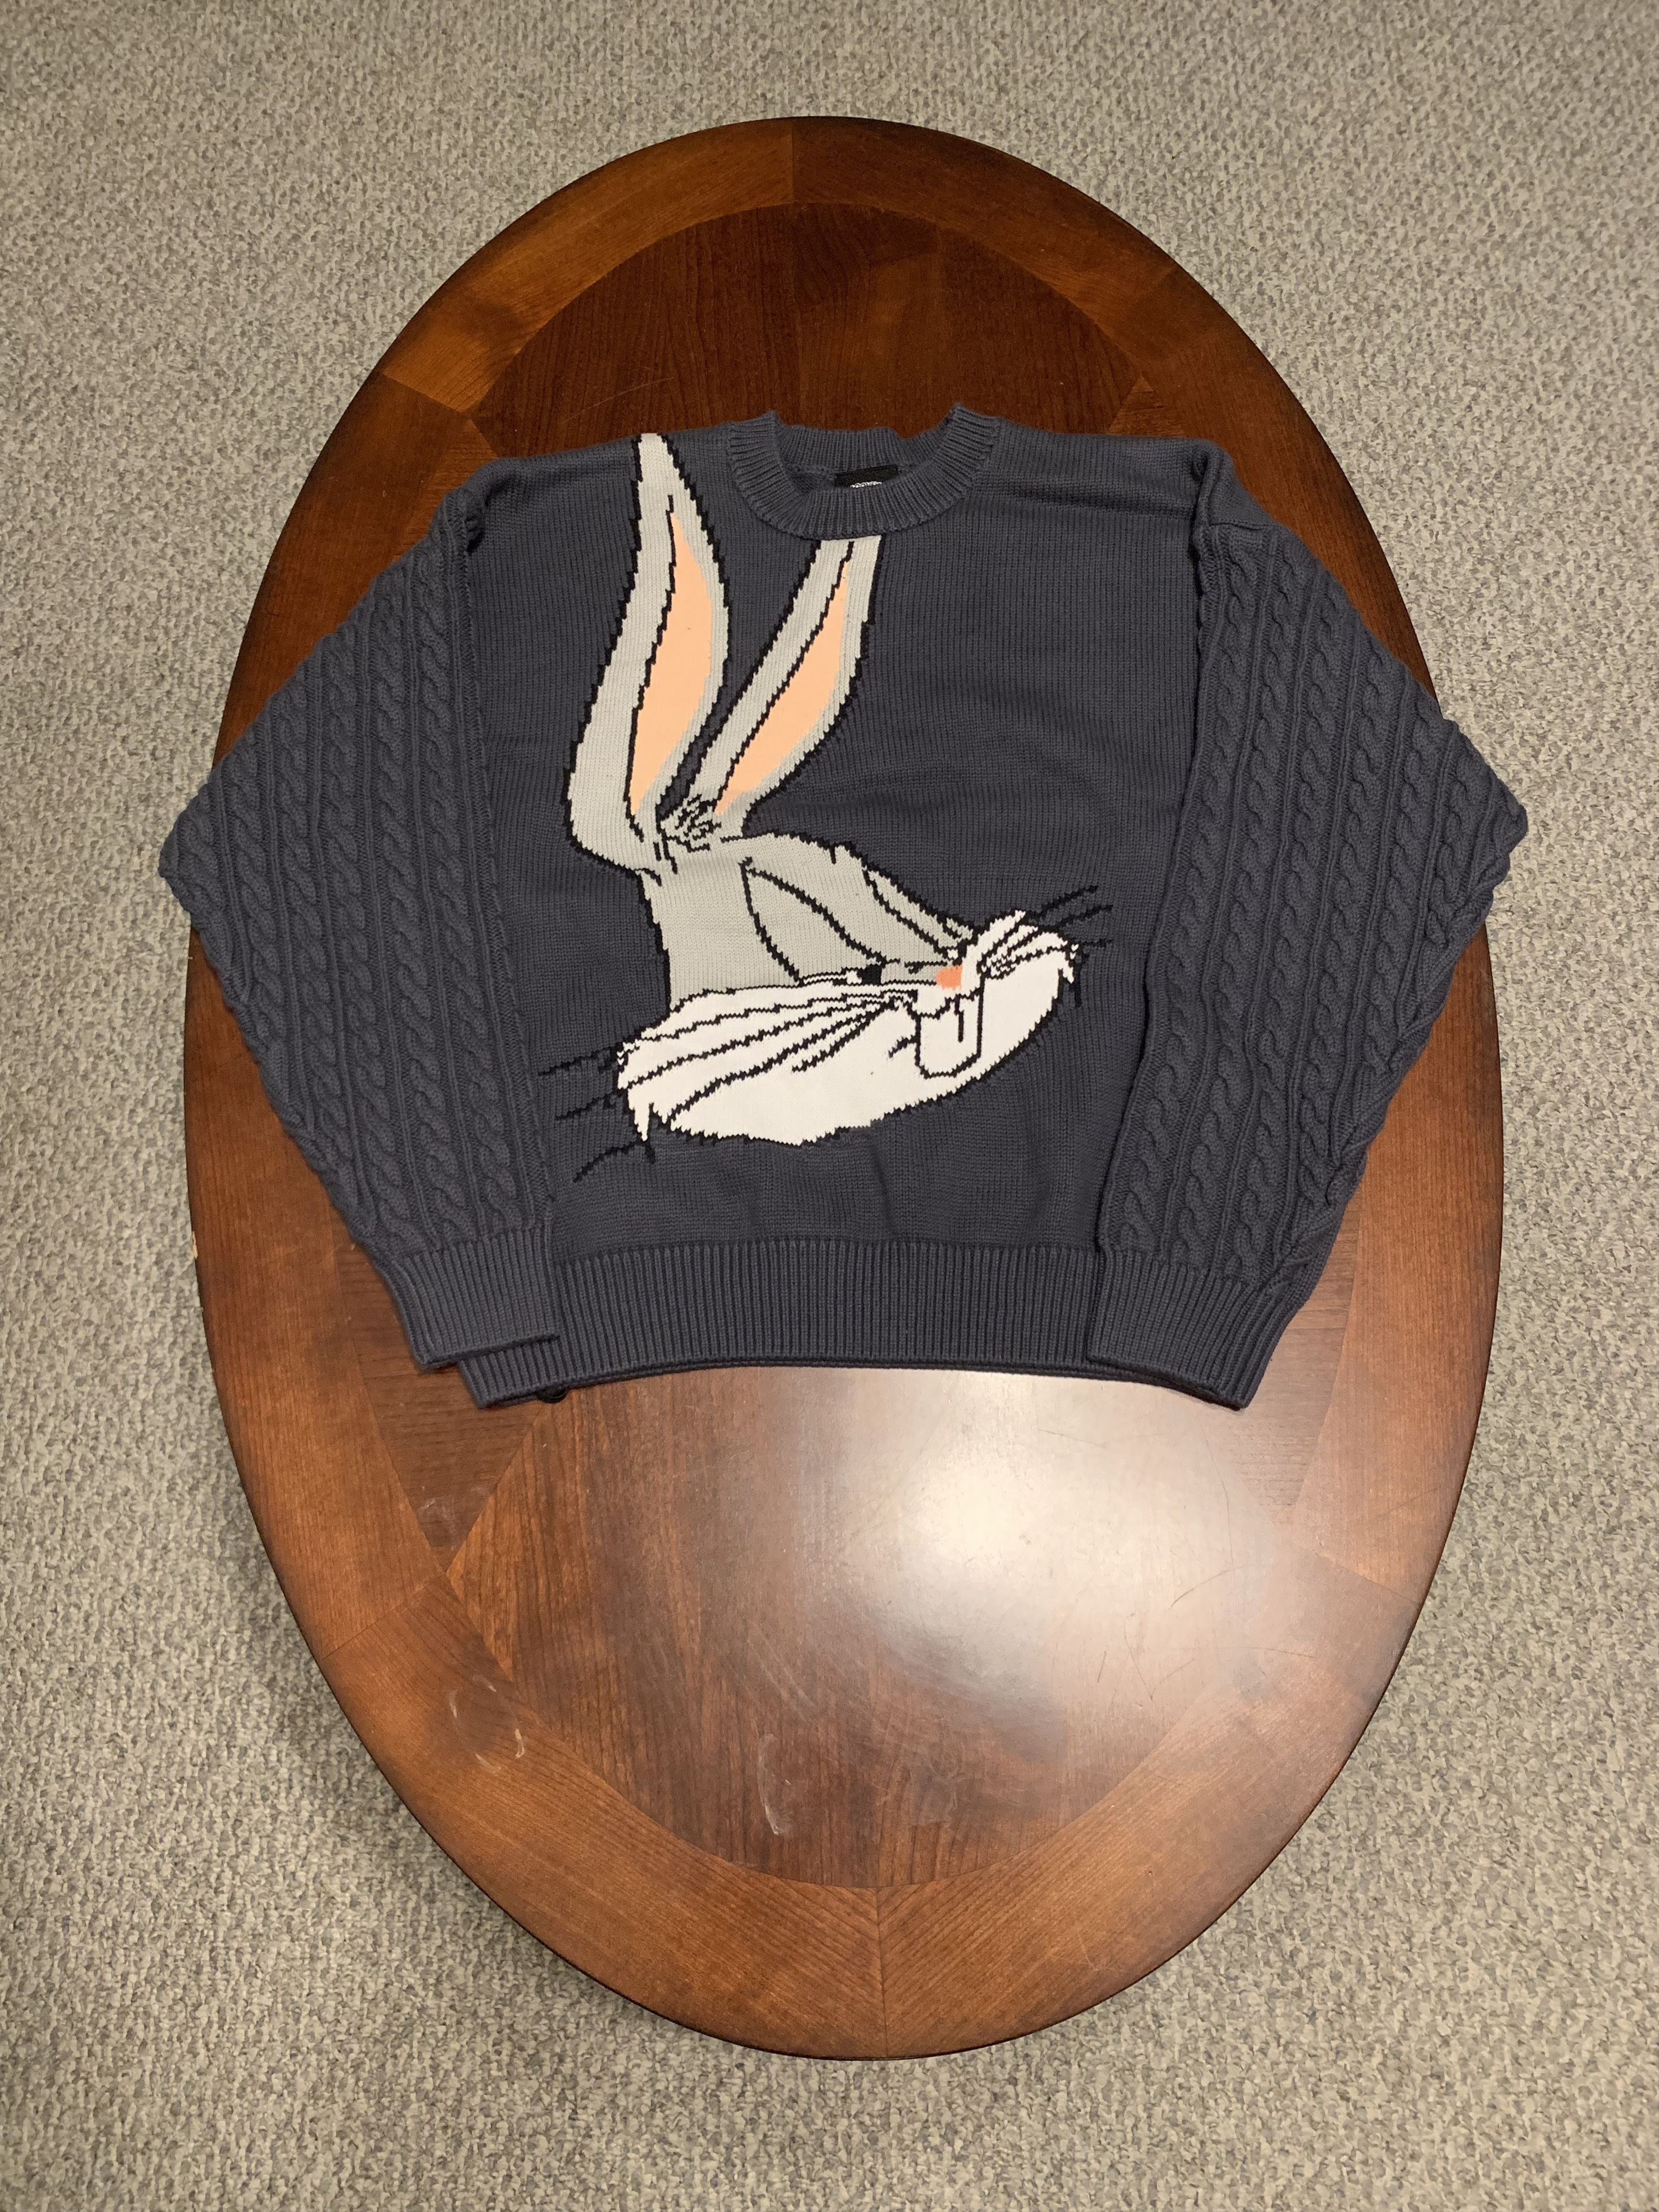 Kith Looney Toons Bug Bunny Crewneck Sweater | Grailed